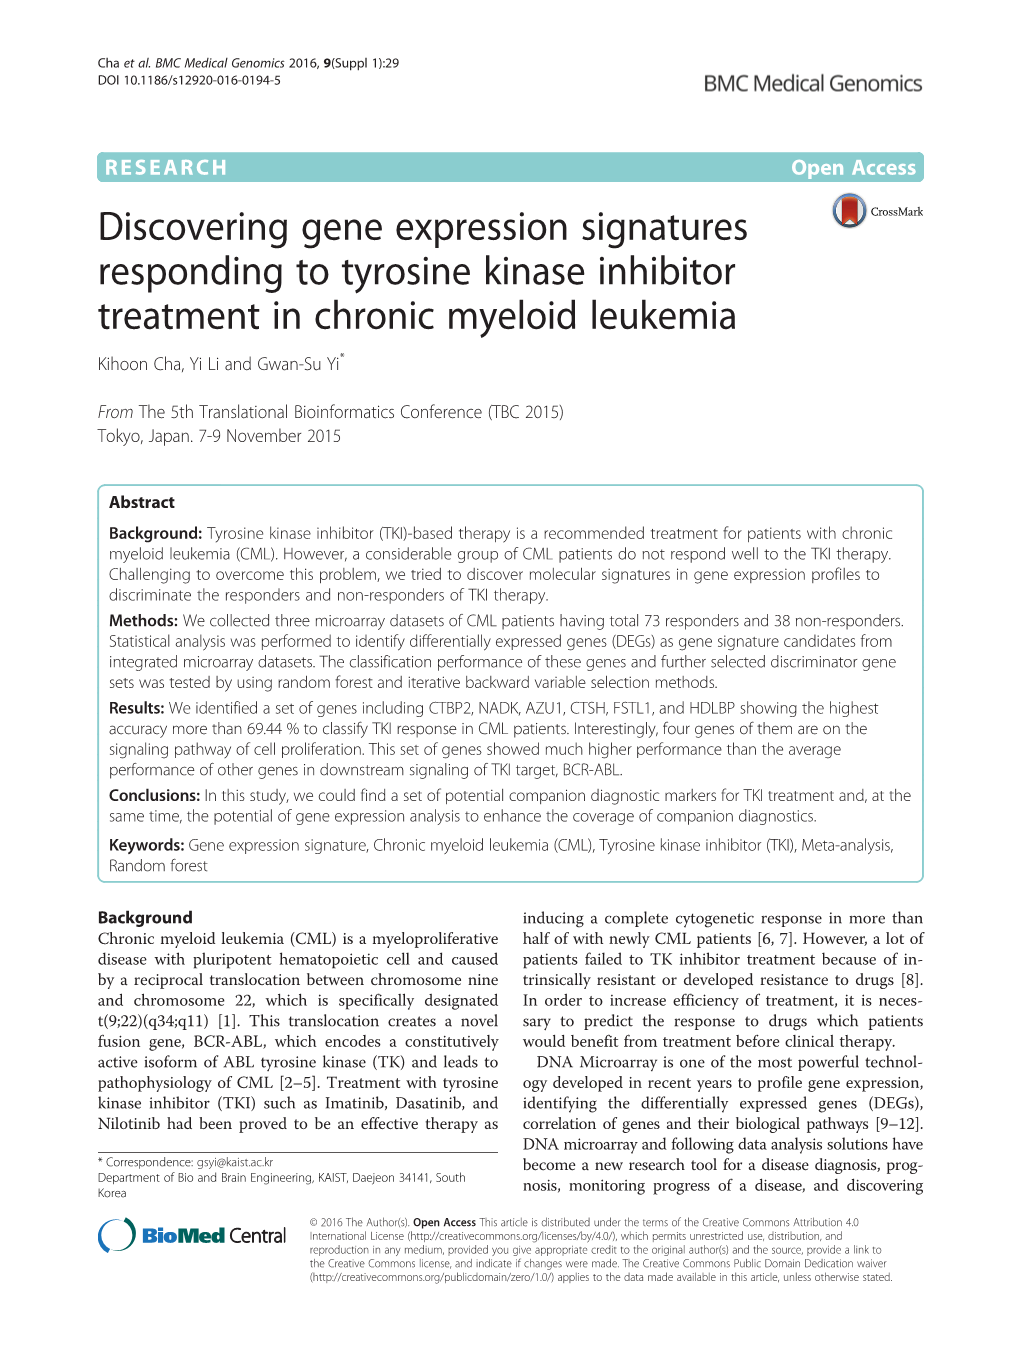 Discovering Gene Expression Signatures Responding to Tyrosine Kinase Inhibitor Treatment in Chronic Myeloid Leukemia Kihoon Cha, Yi Li and Gwan-Su Yi*